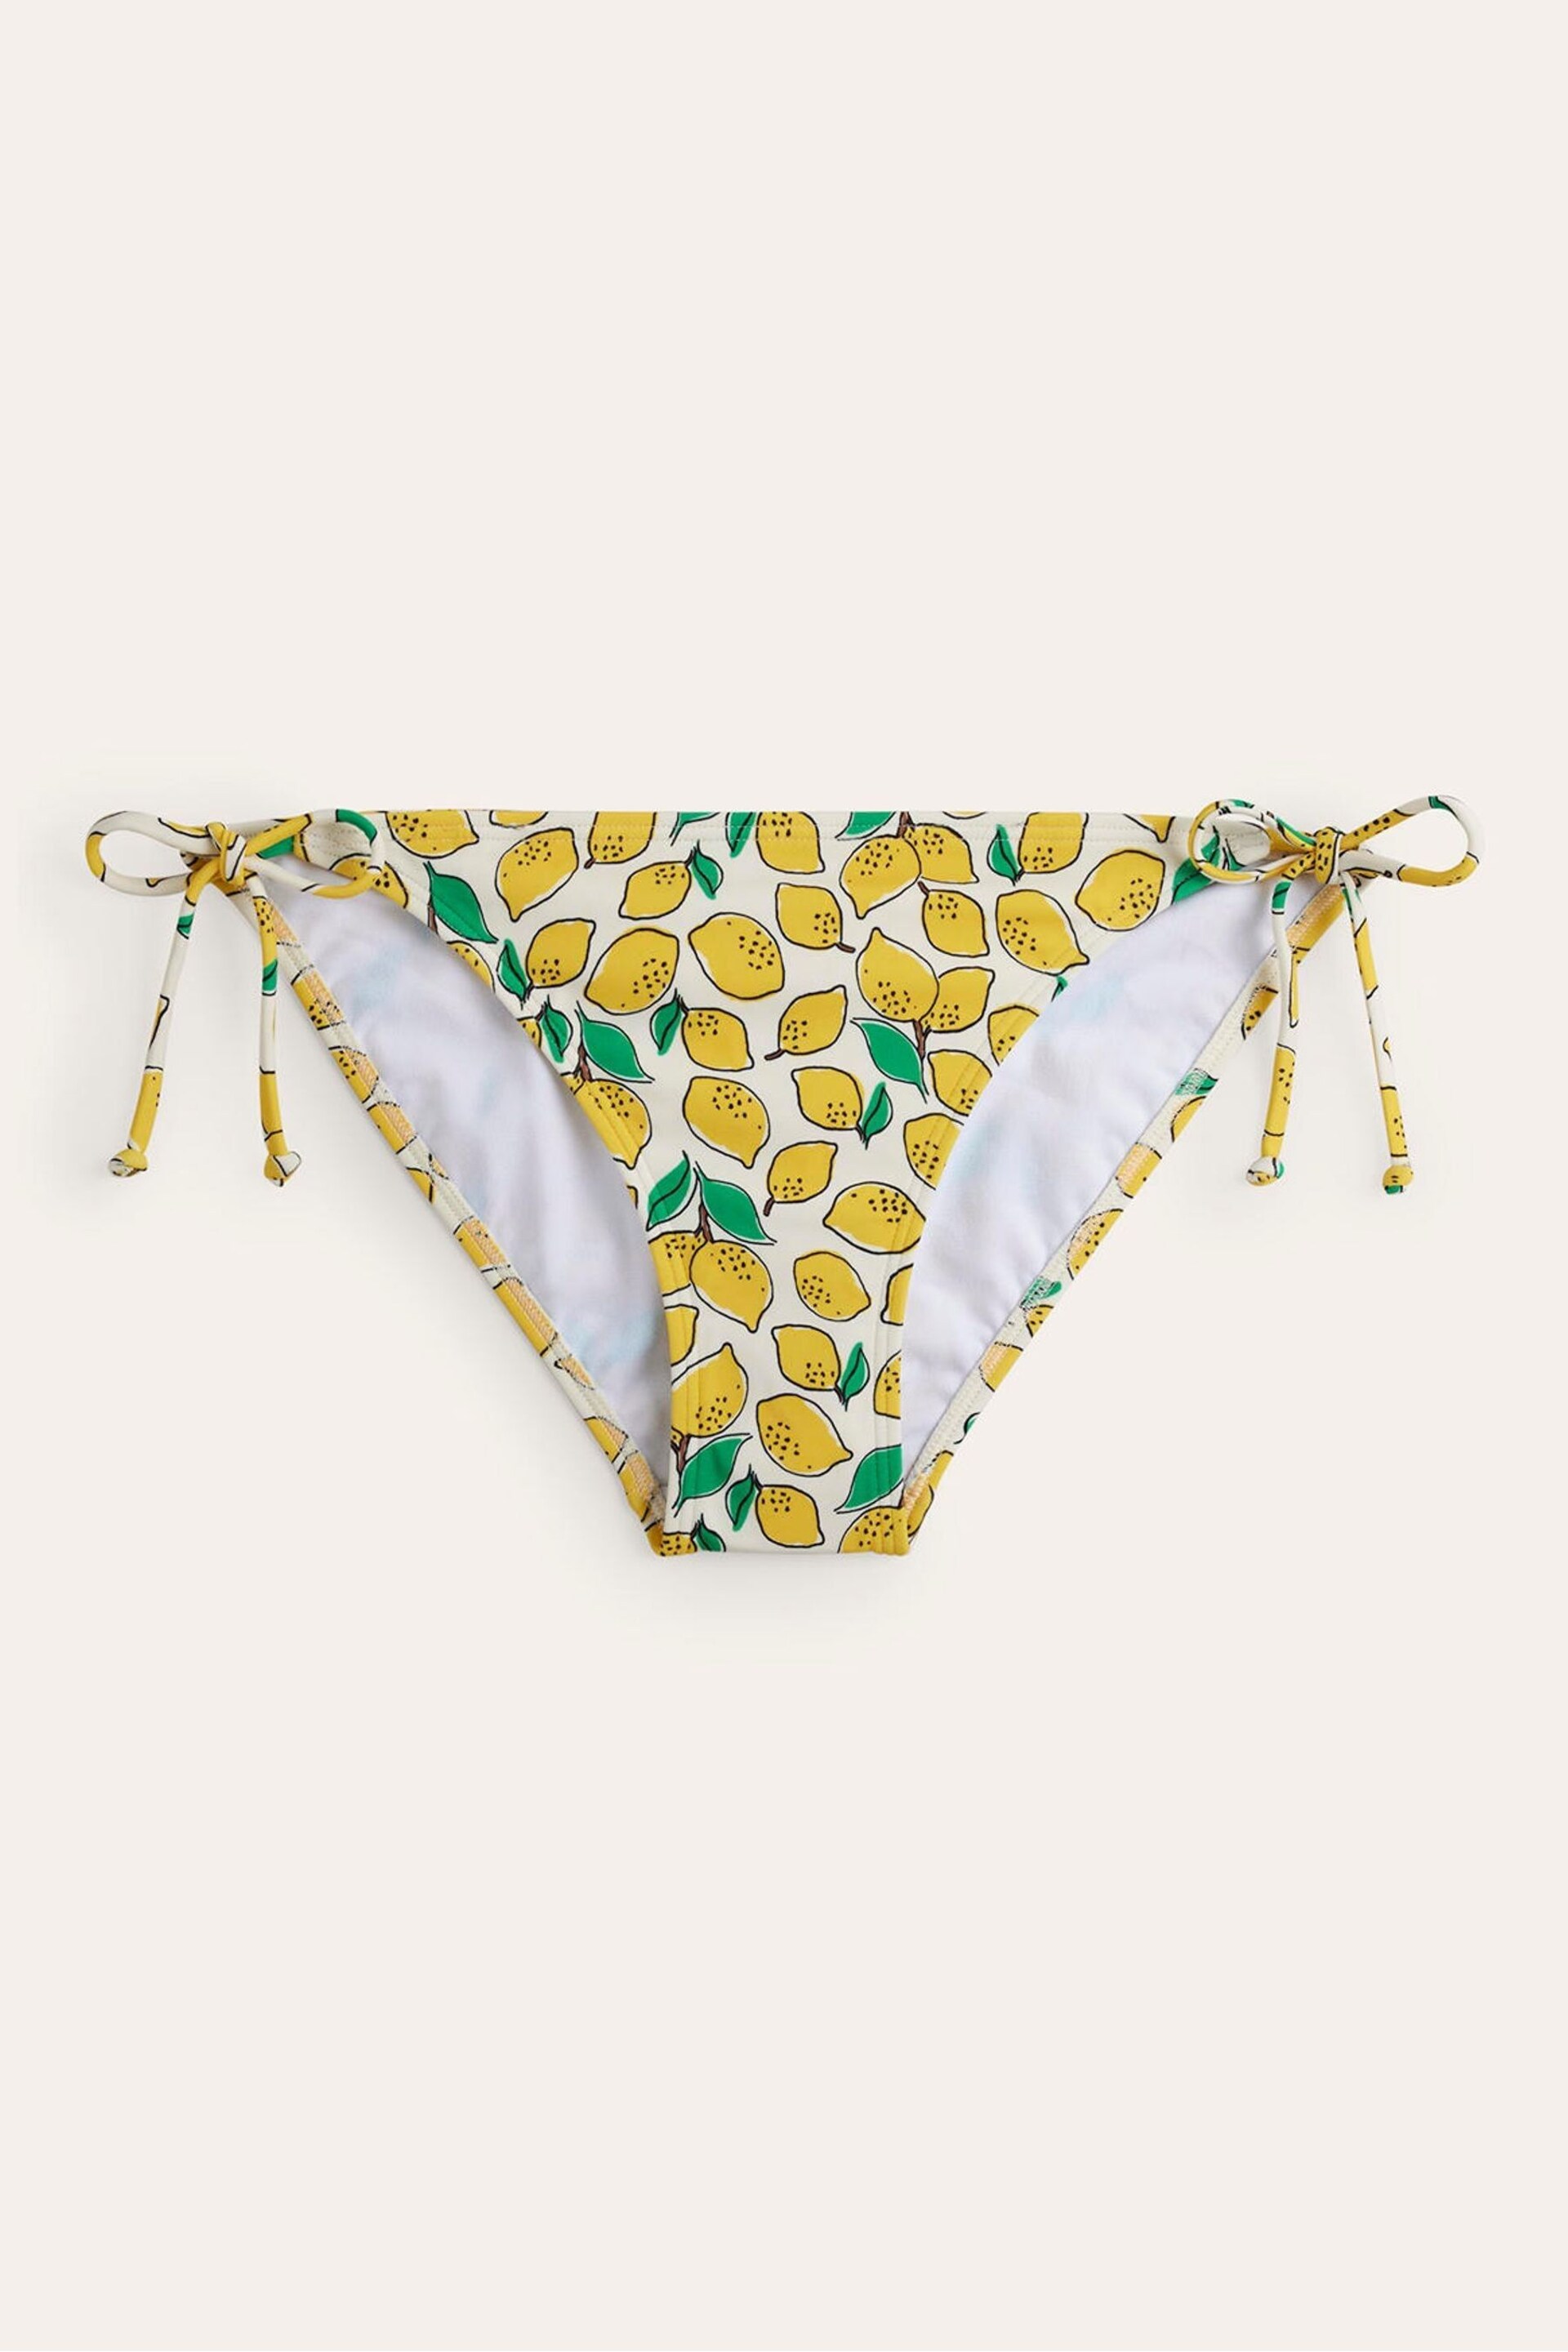 Boden Yellow Symi String Bikini Bottoms - Image 6 of 7